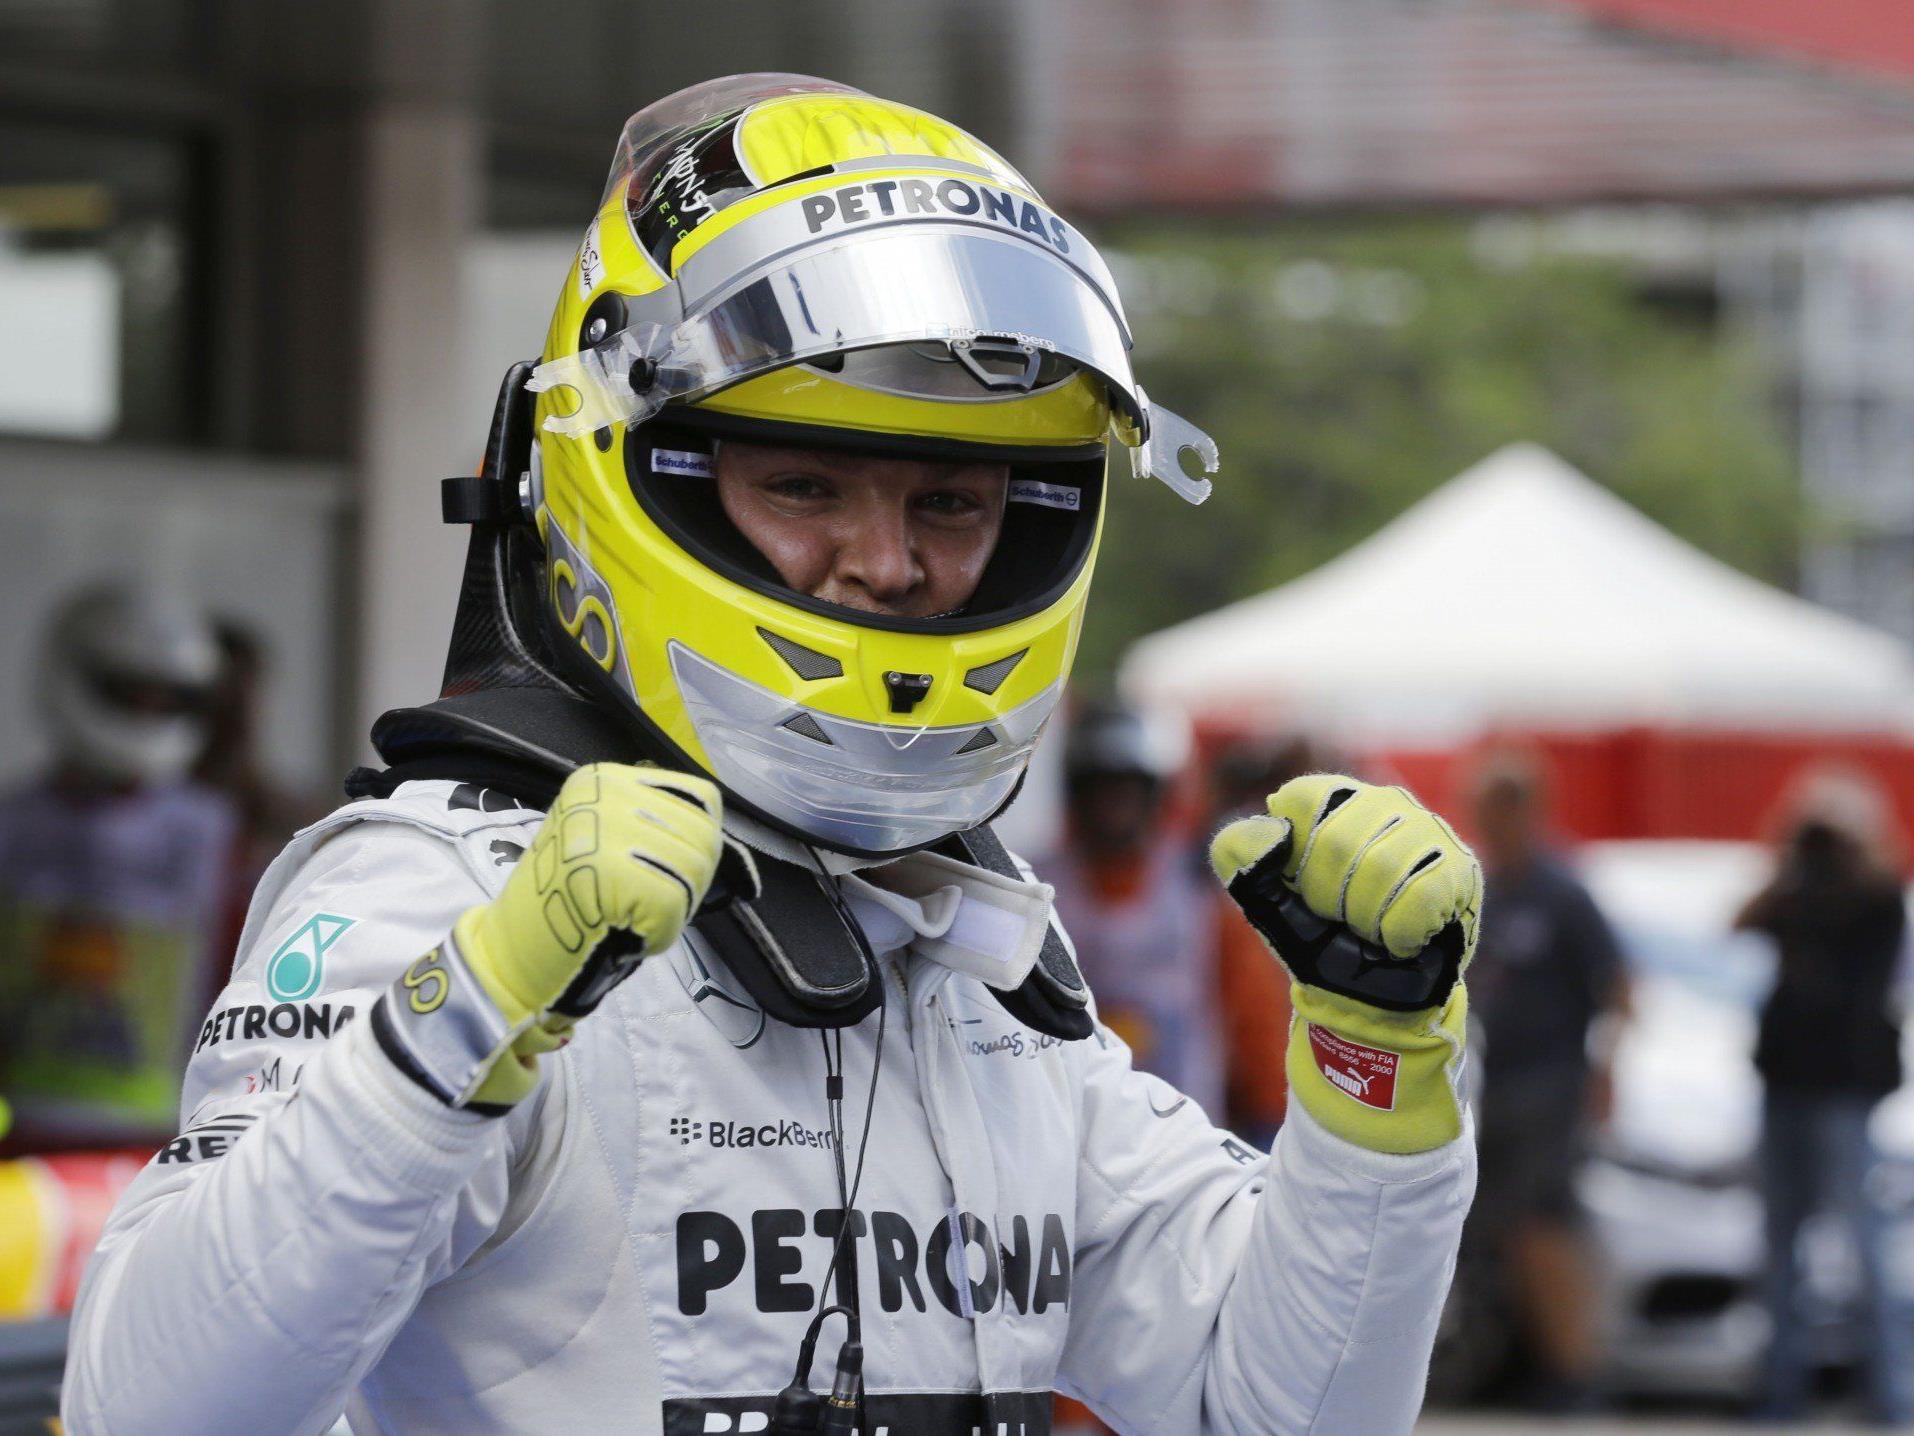 Rosberg auf "Pole"